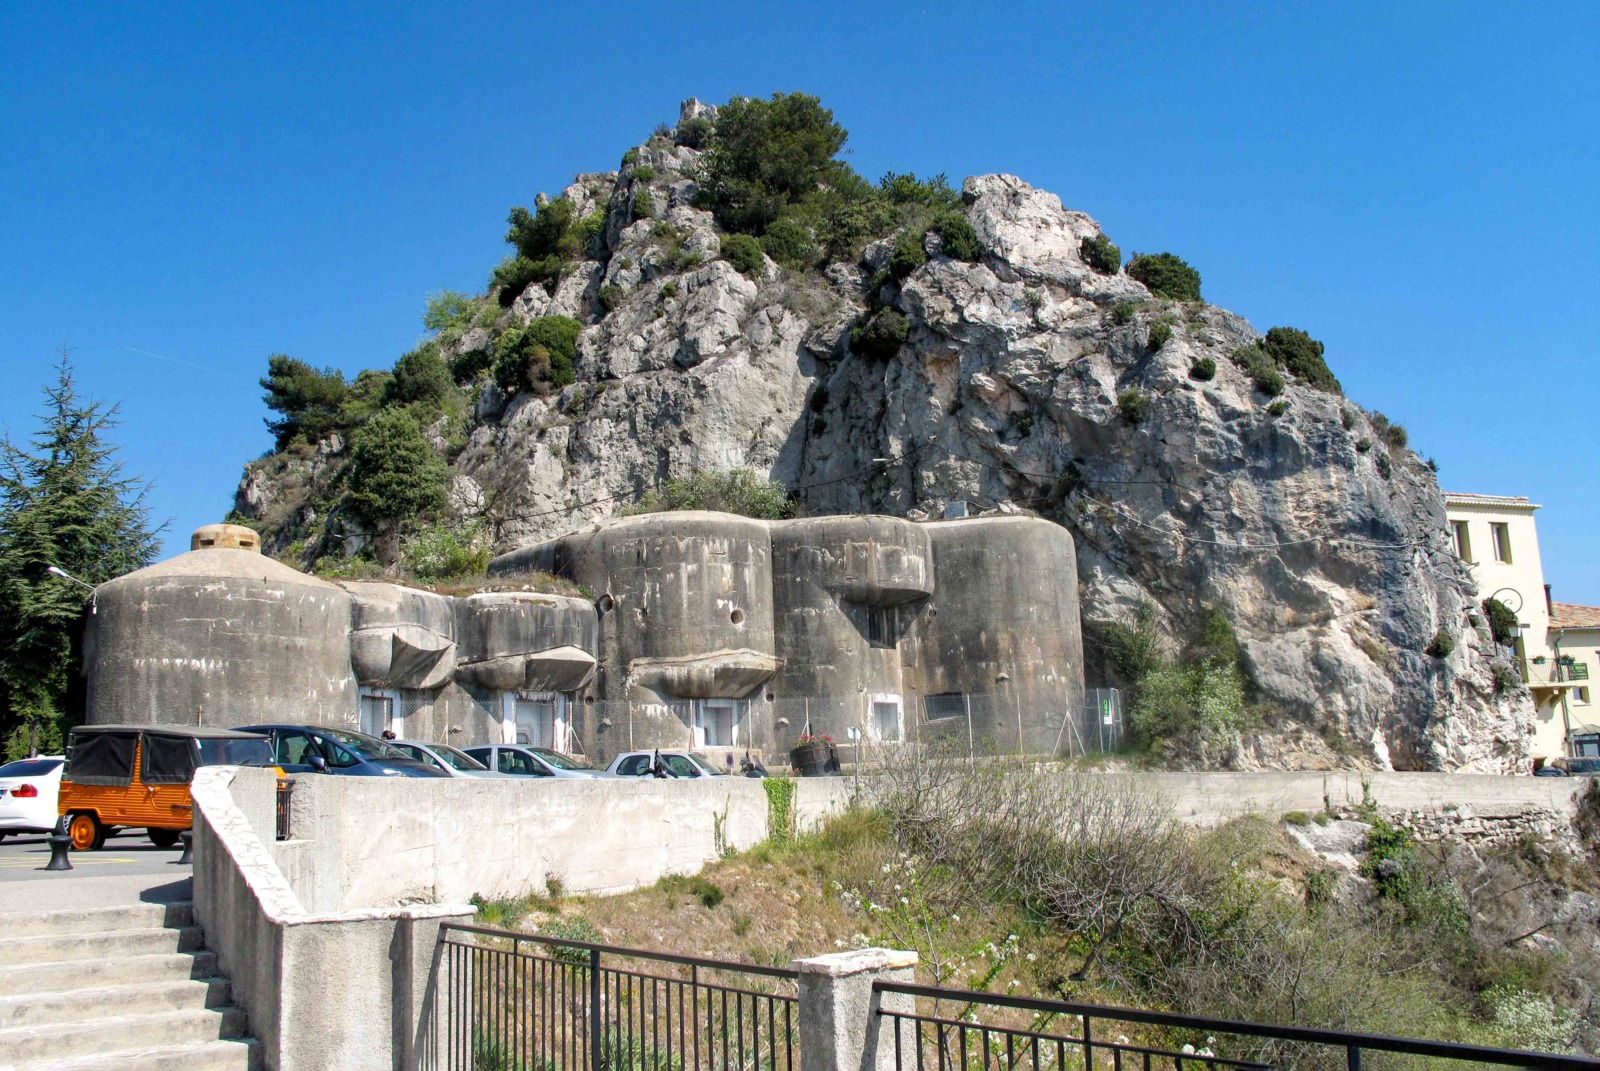 The Maginot Line fort of Sainte-Agnès. Photo: Tangopaso (Public Domain)